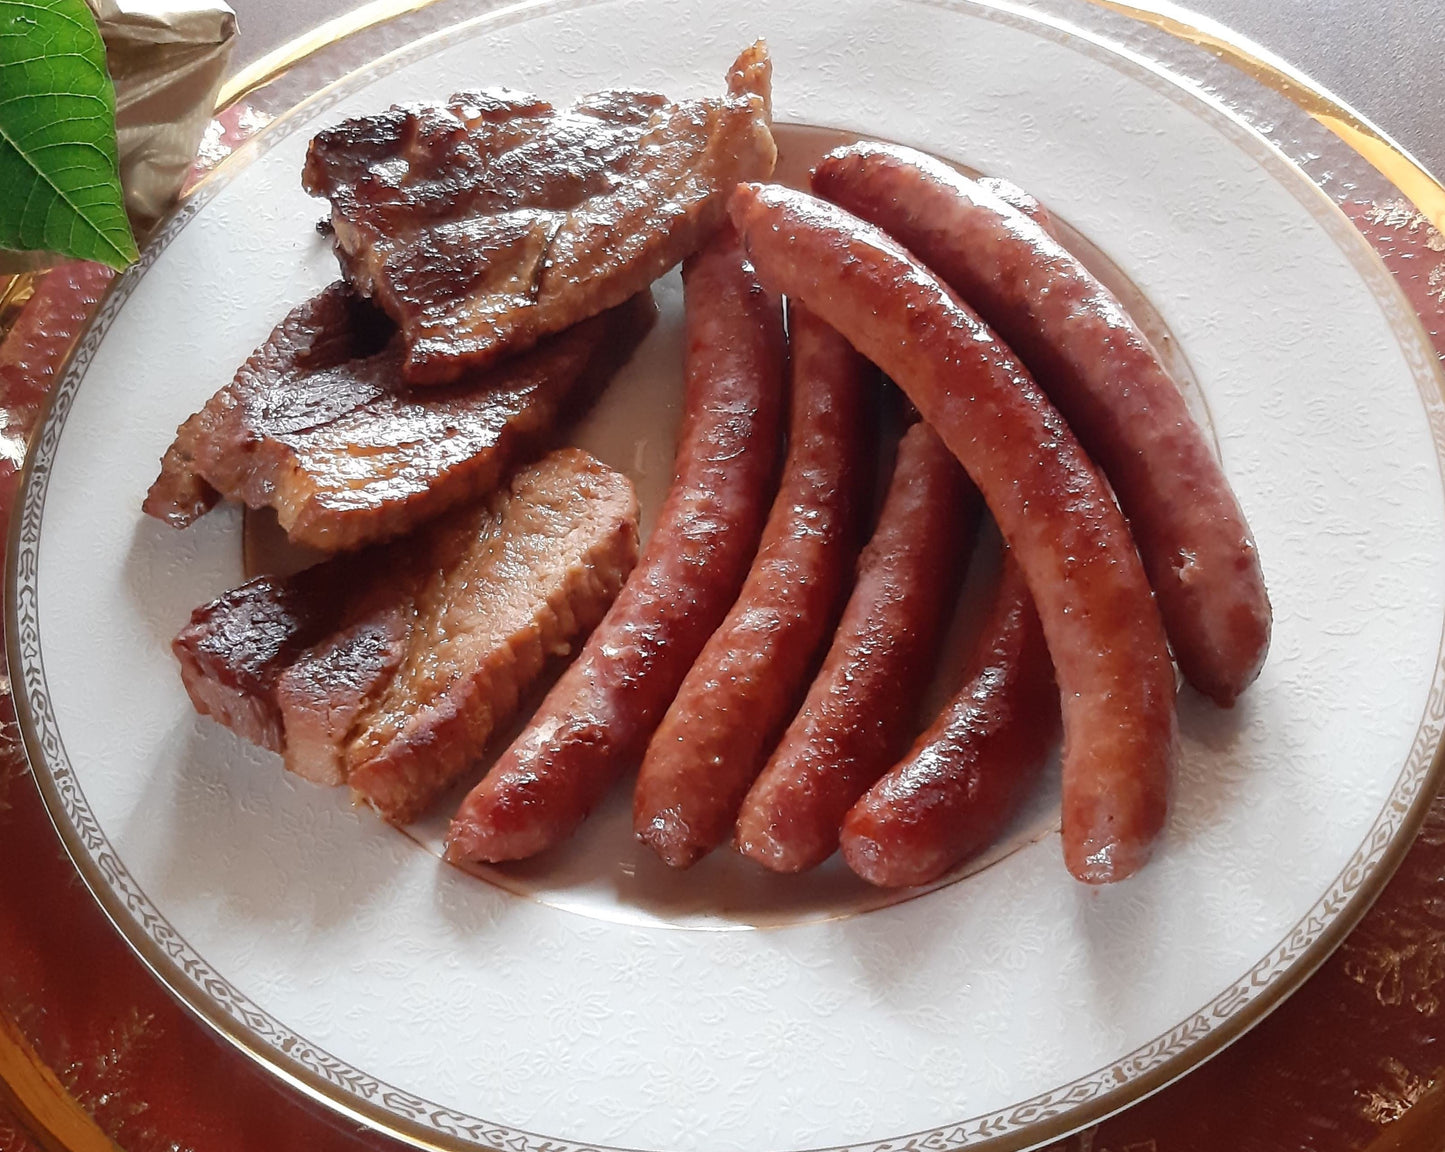 Pork sausage 4 pieces (300g)